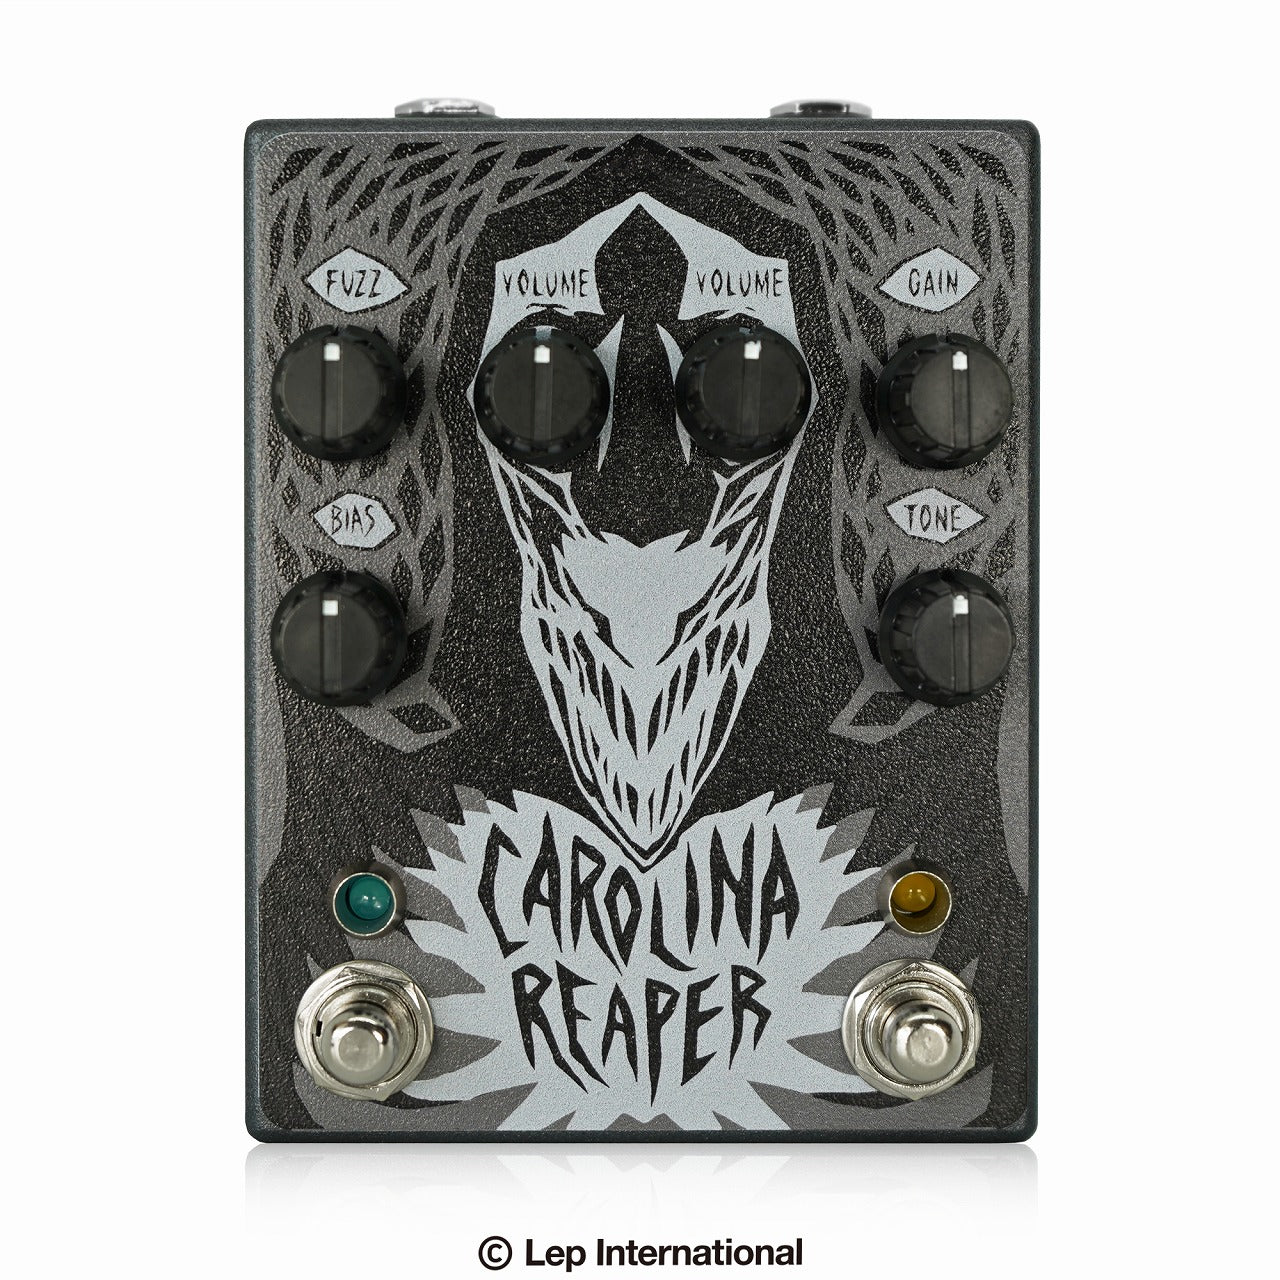 Cusack Music/The Carolina Reaper